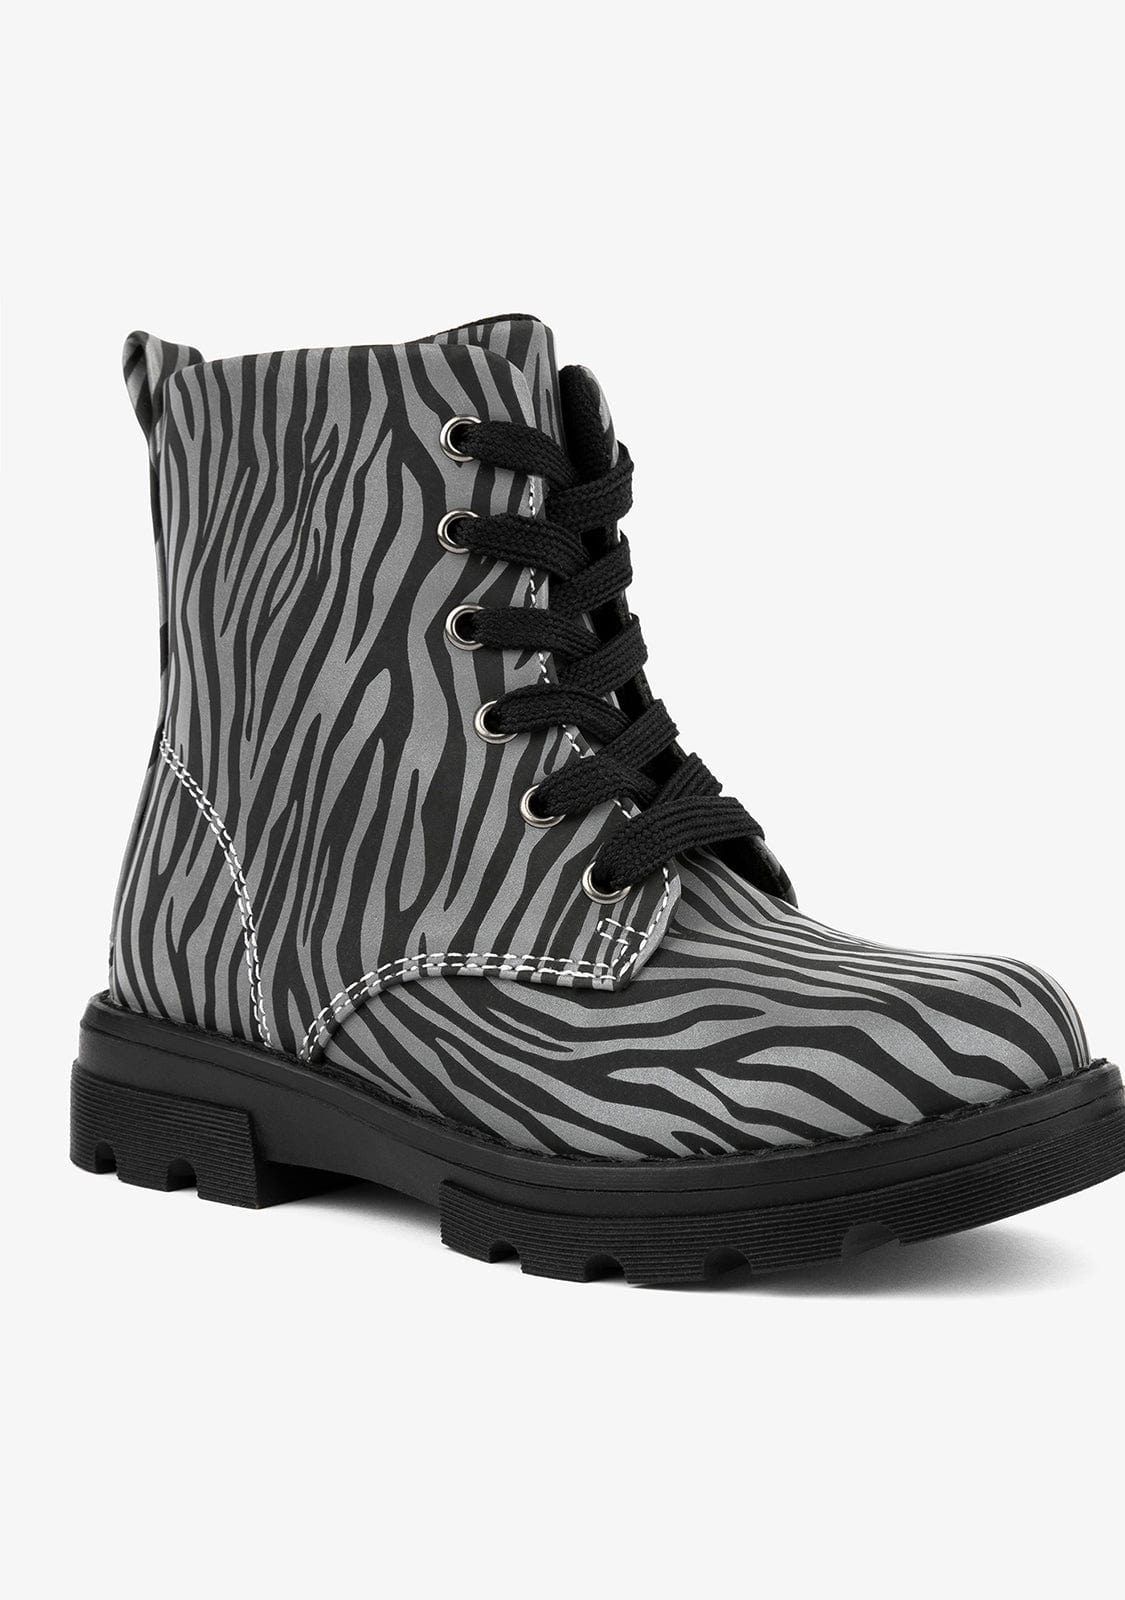 B&W JUNIOR Shoes Zebra Reflective Combat Boots